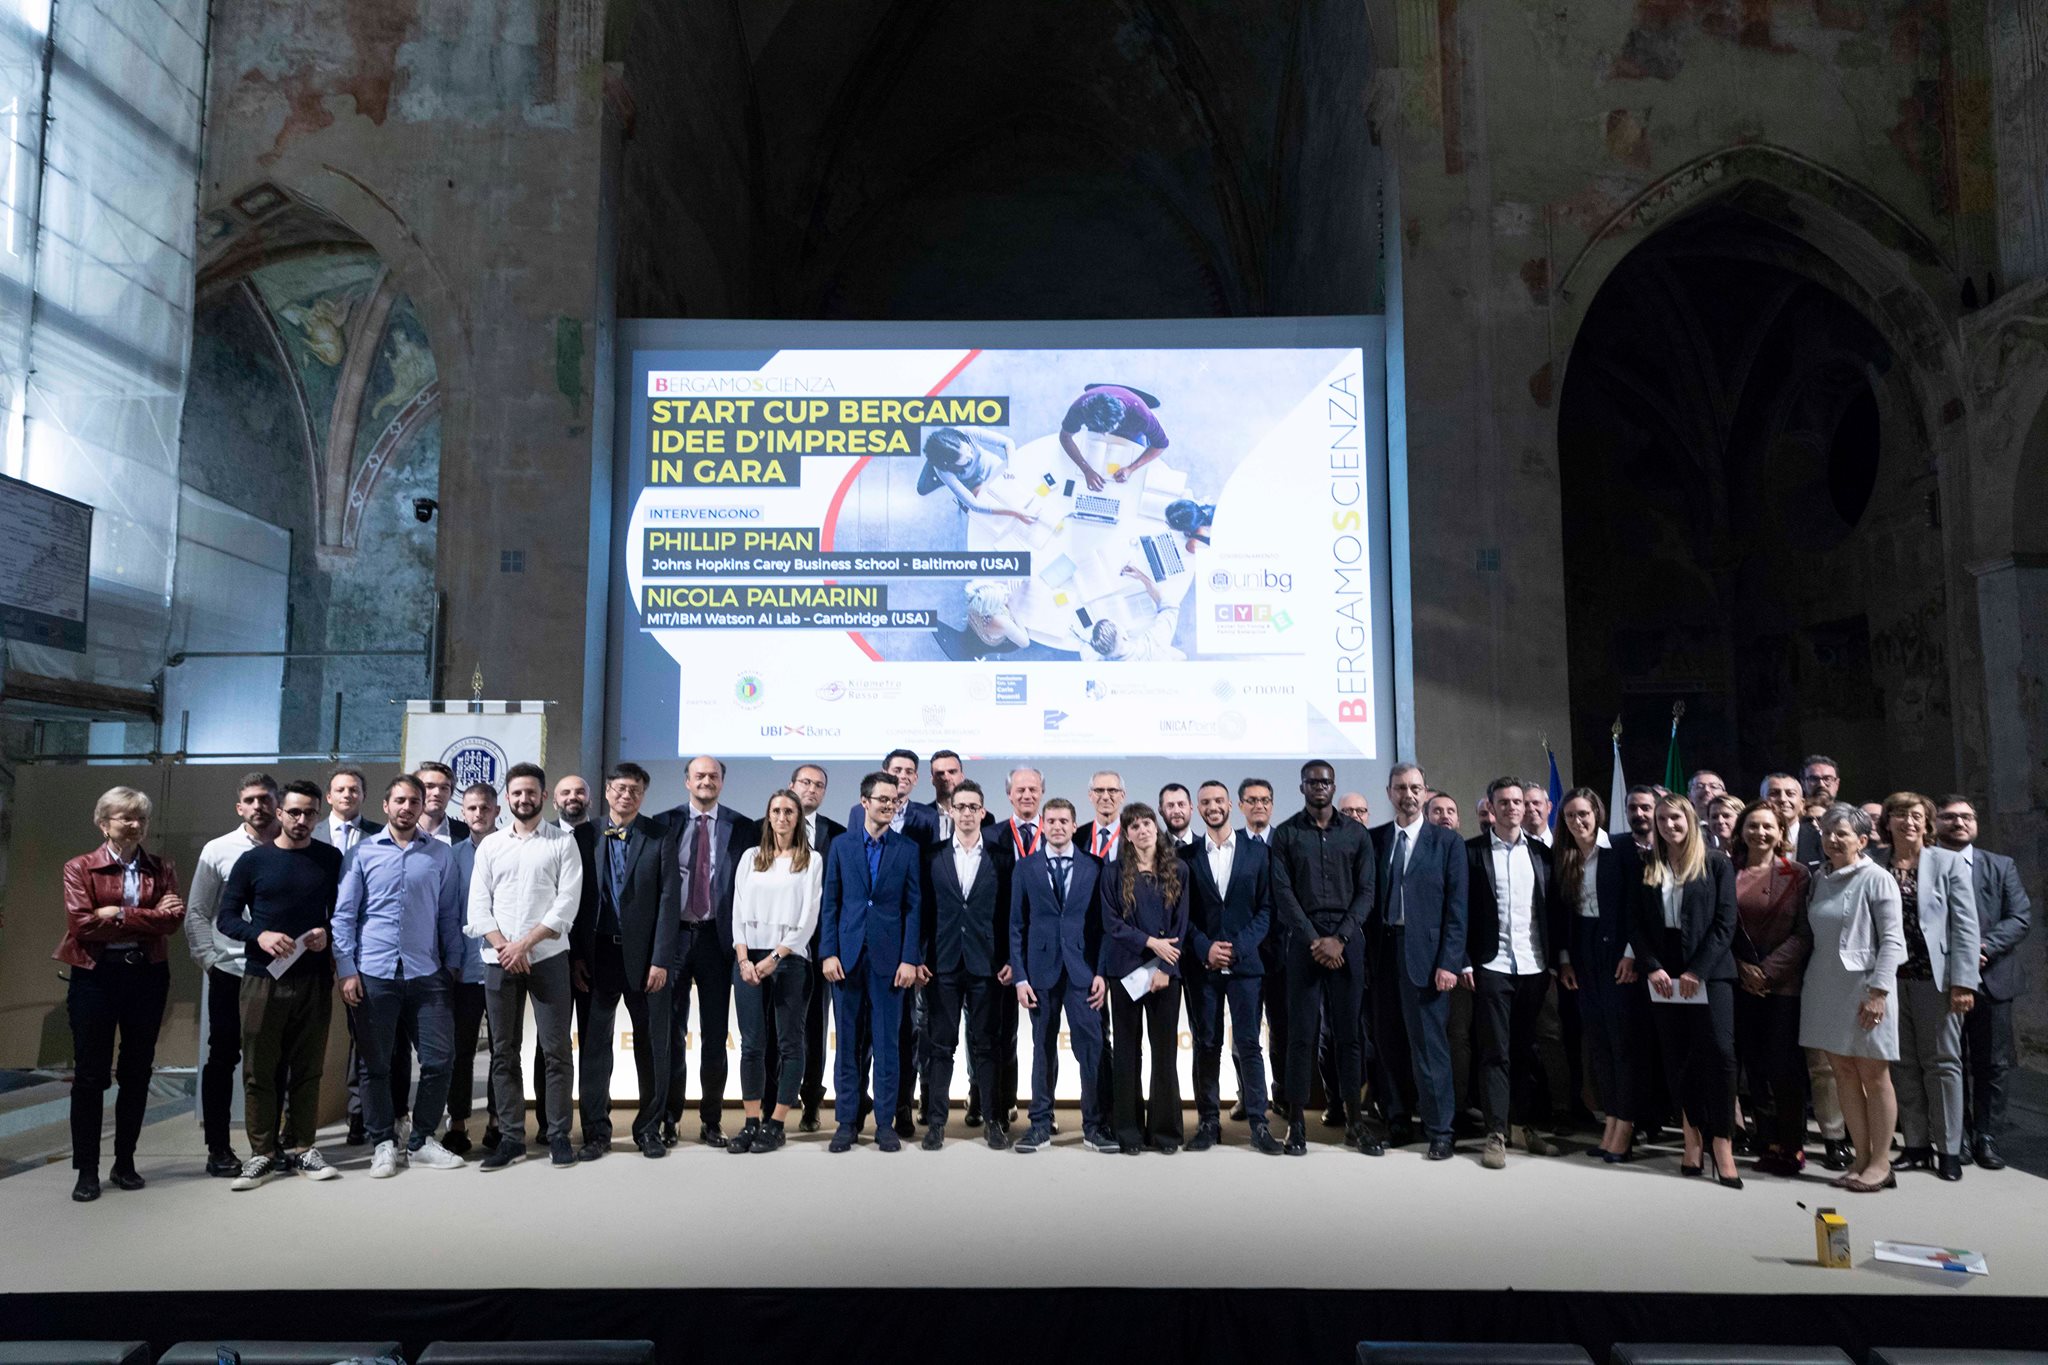 Start Cup Bergamo 2018. The Award Ceremony